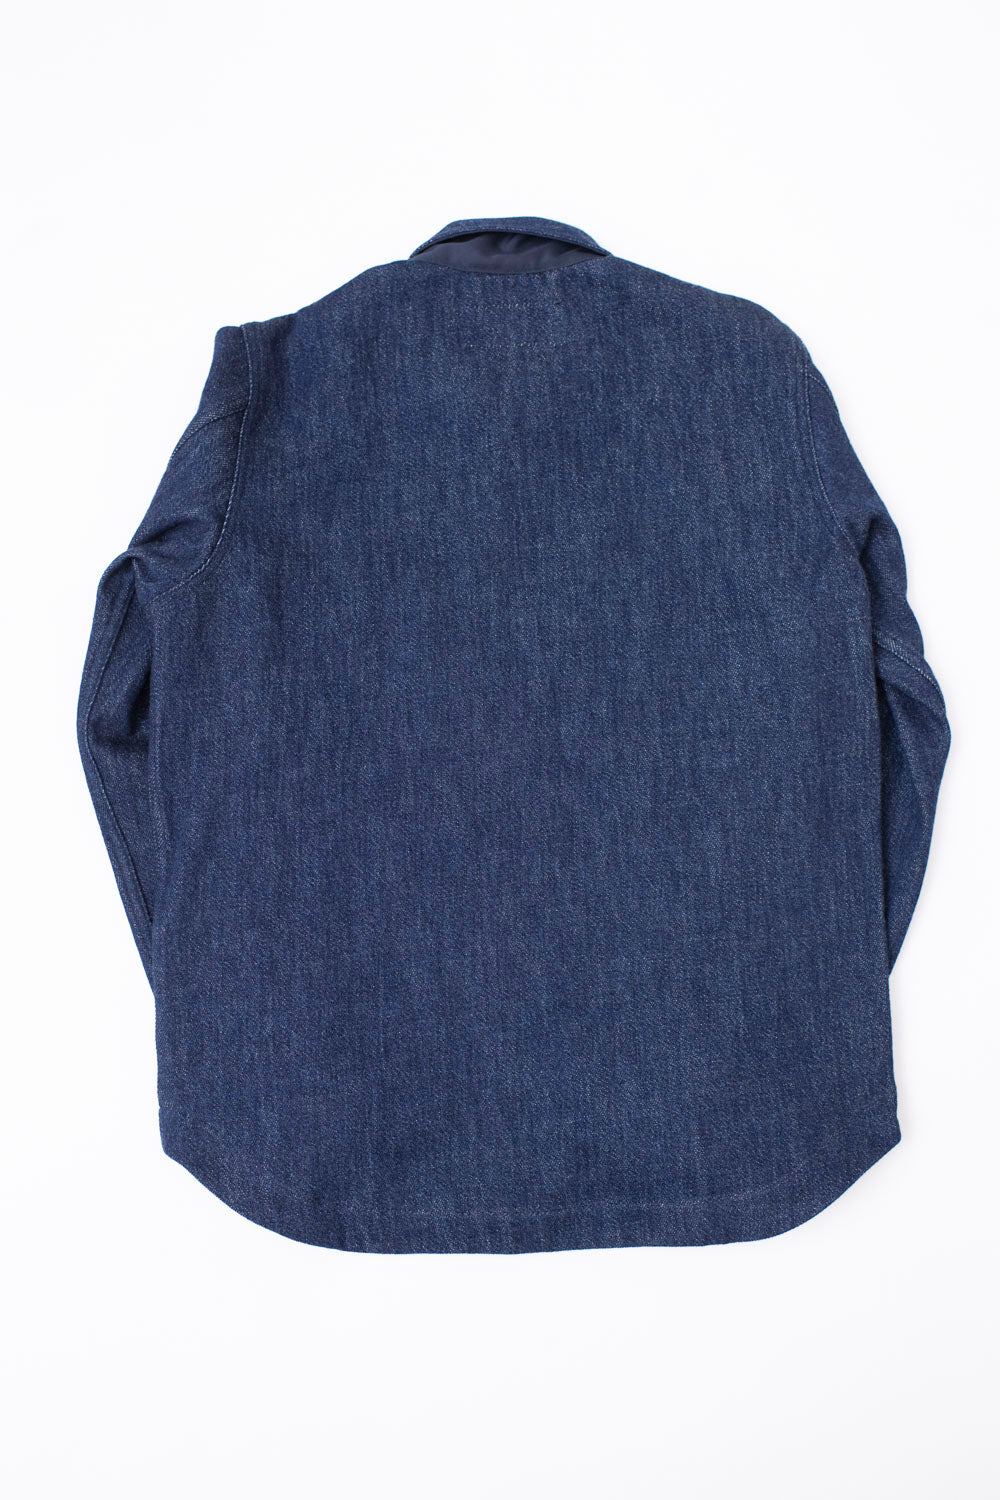 Field Jacket Knit Denim - Indigo